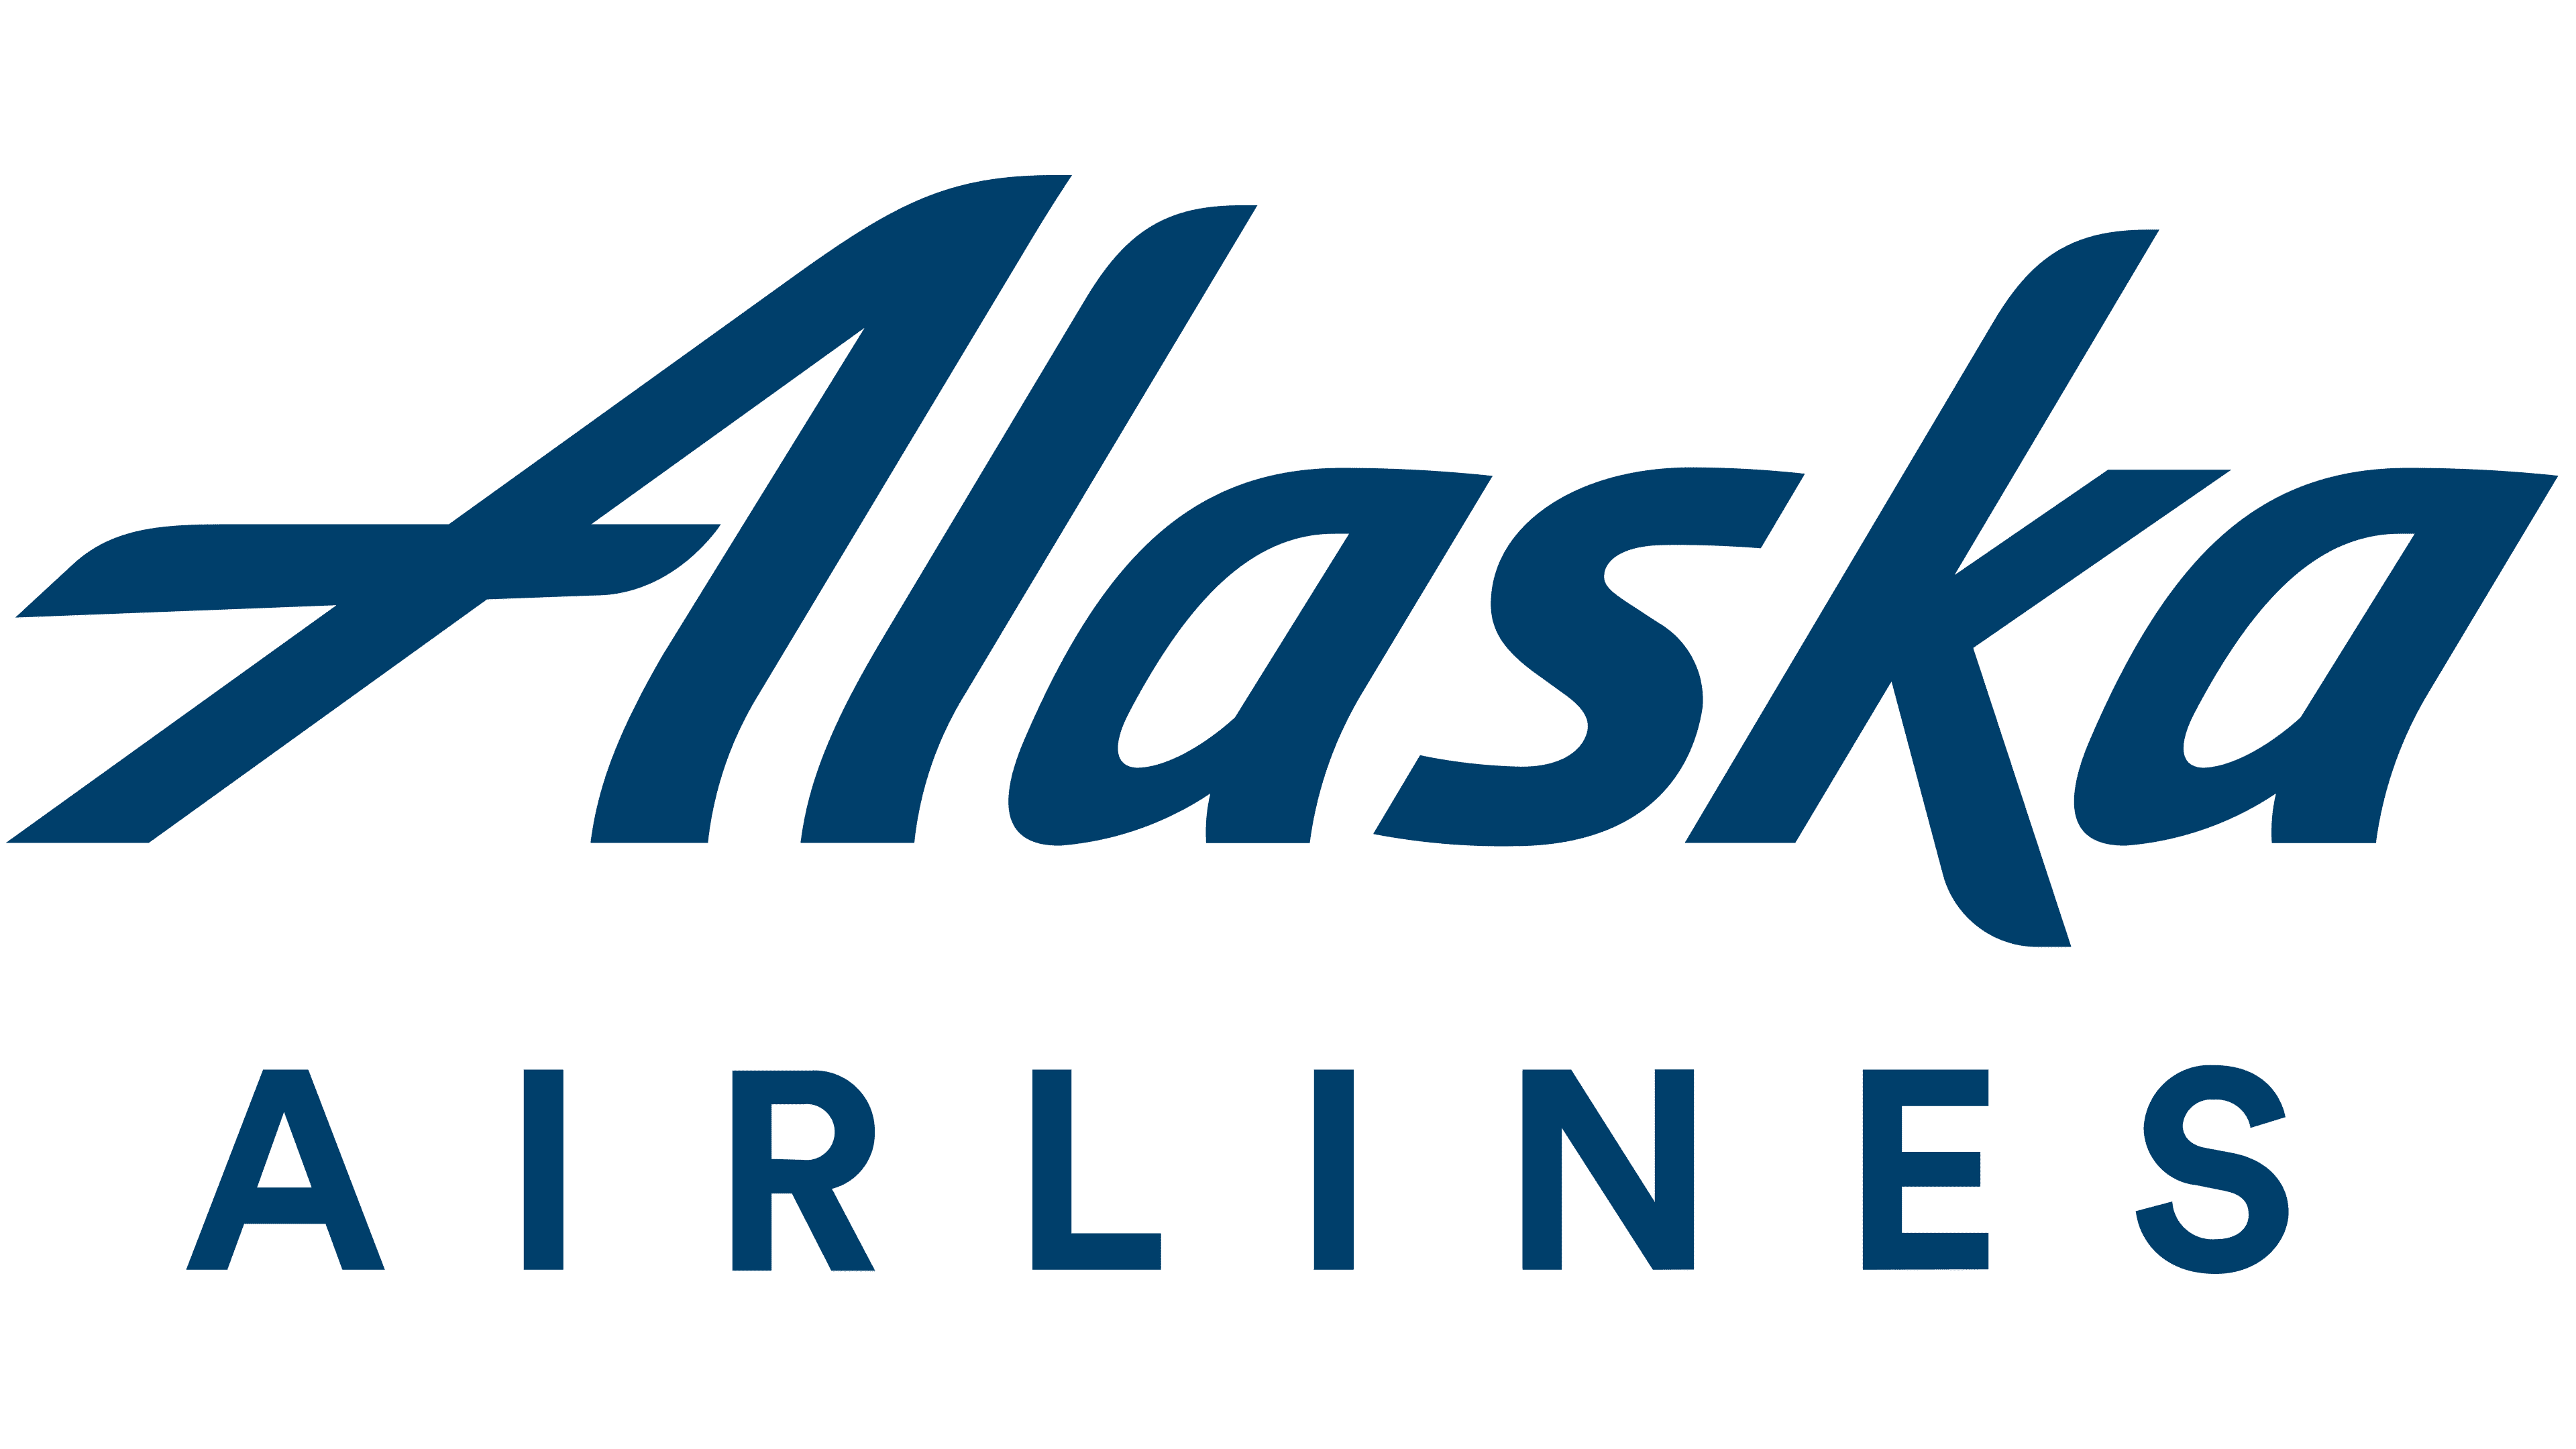 Alaska Airlines Mumbai Office